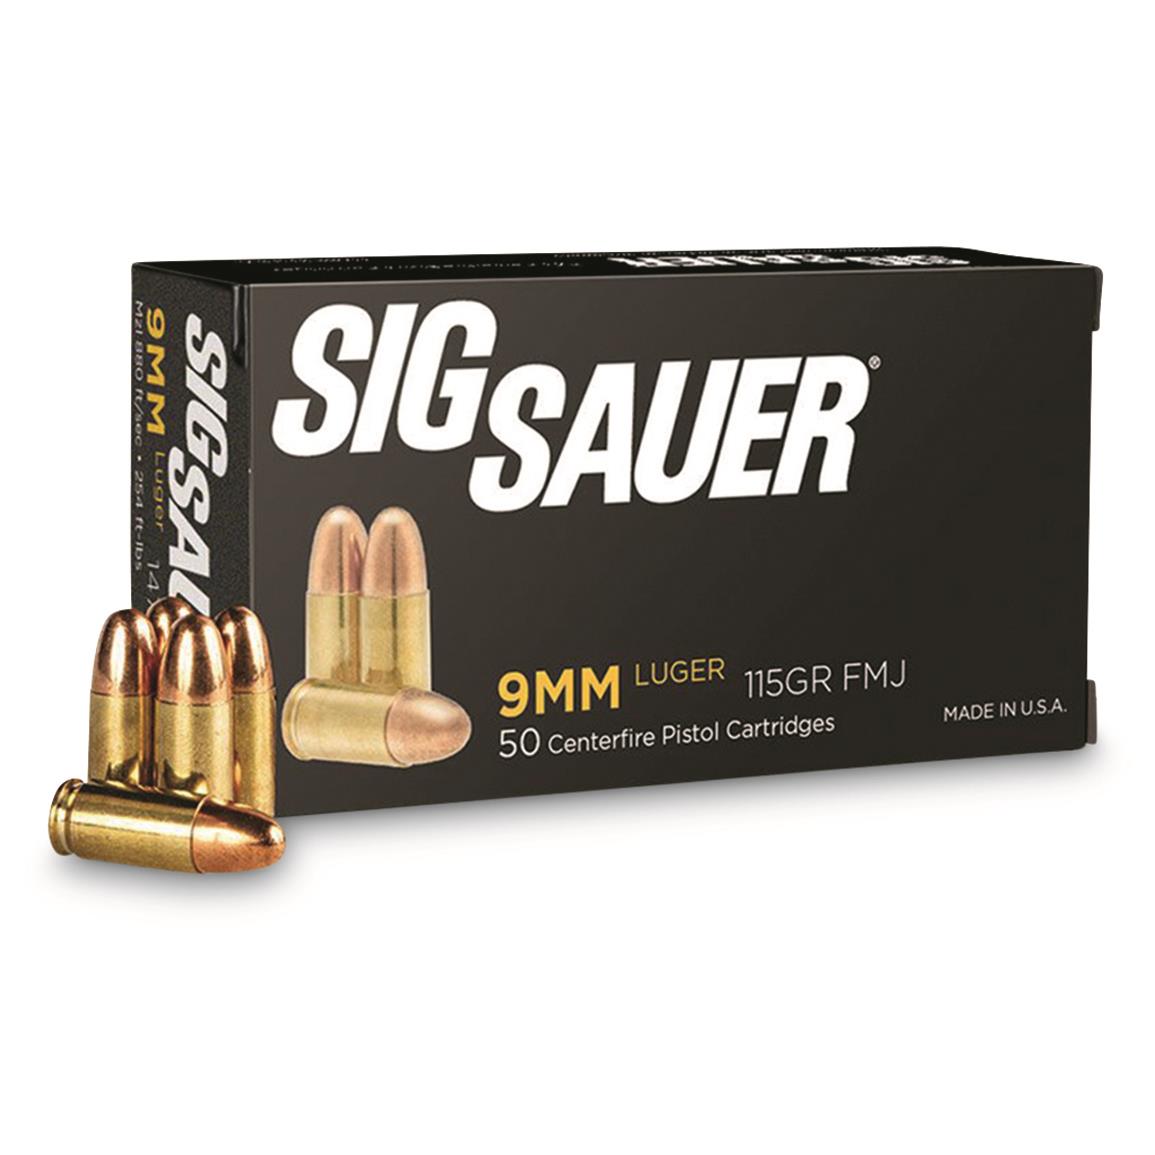 SIG SAUER Elite Performance, 9mm, FMJ, 115 Grain, 50 Rounds